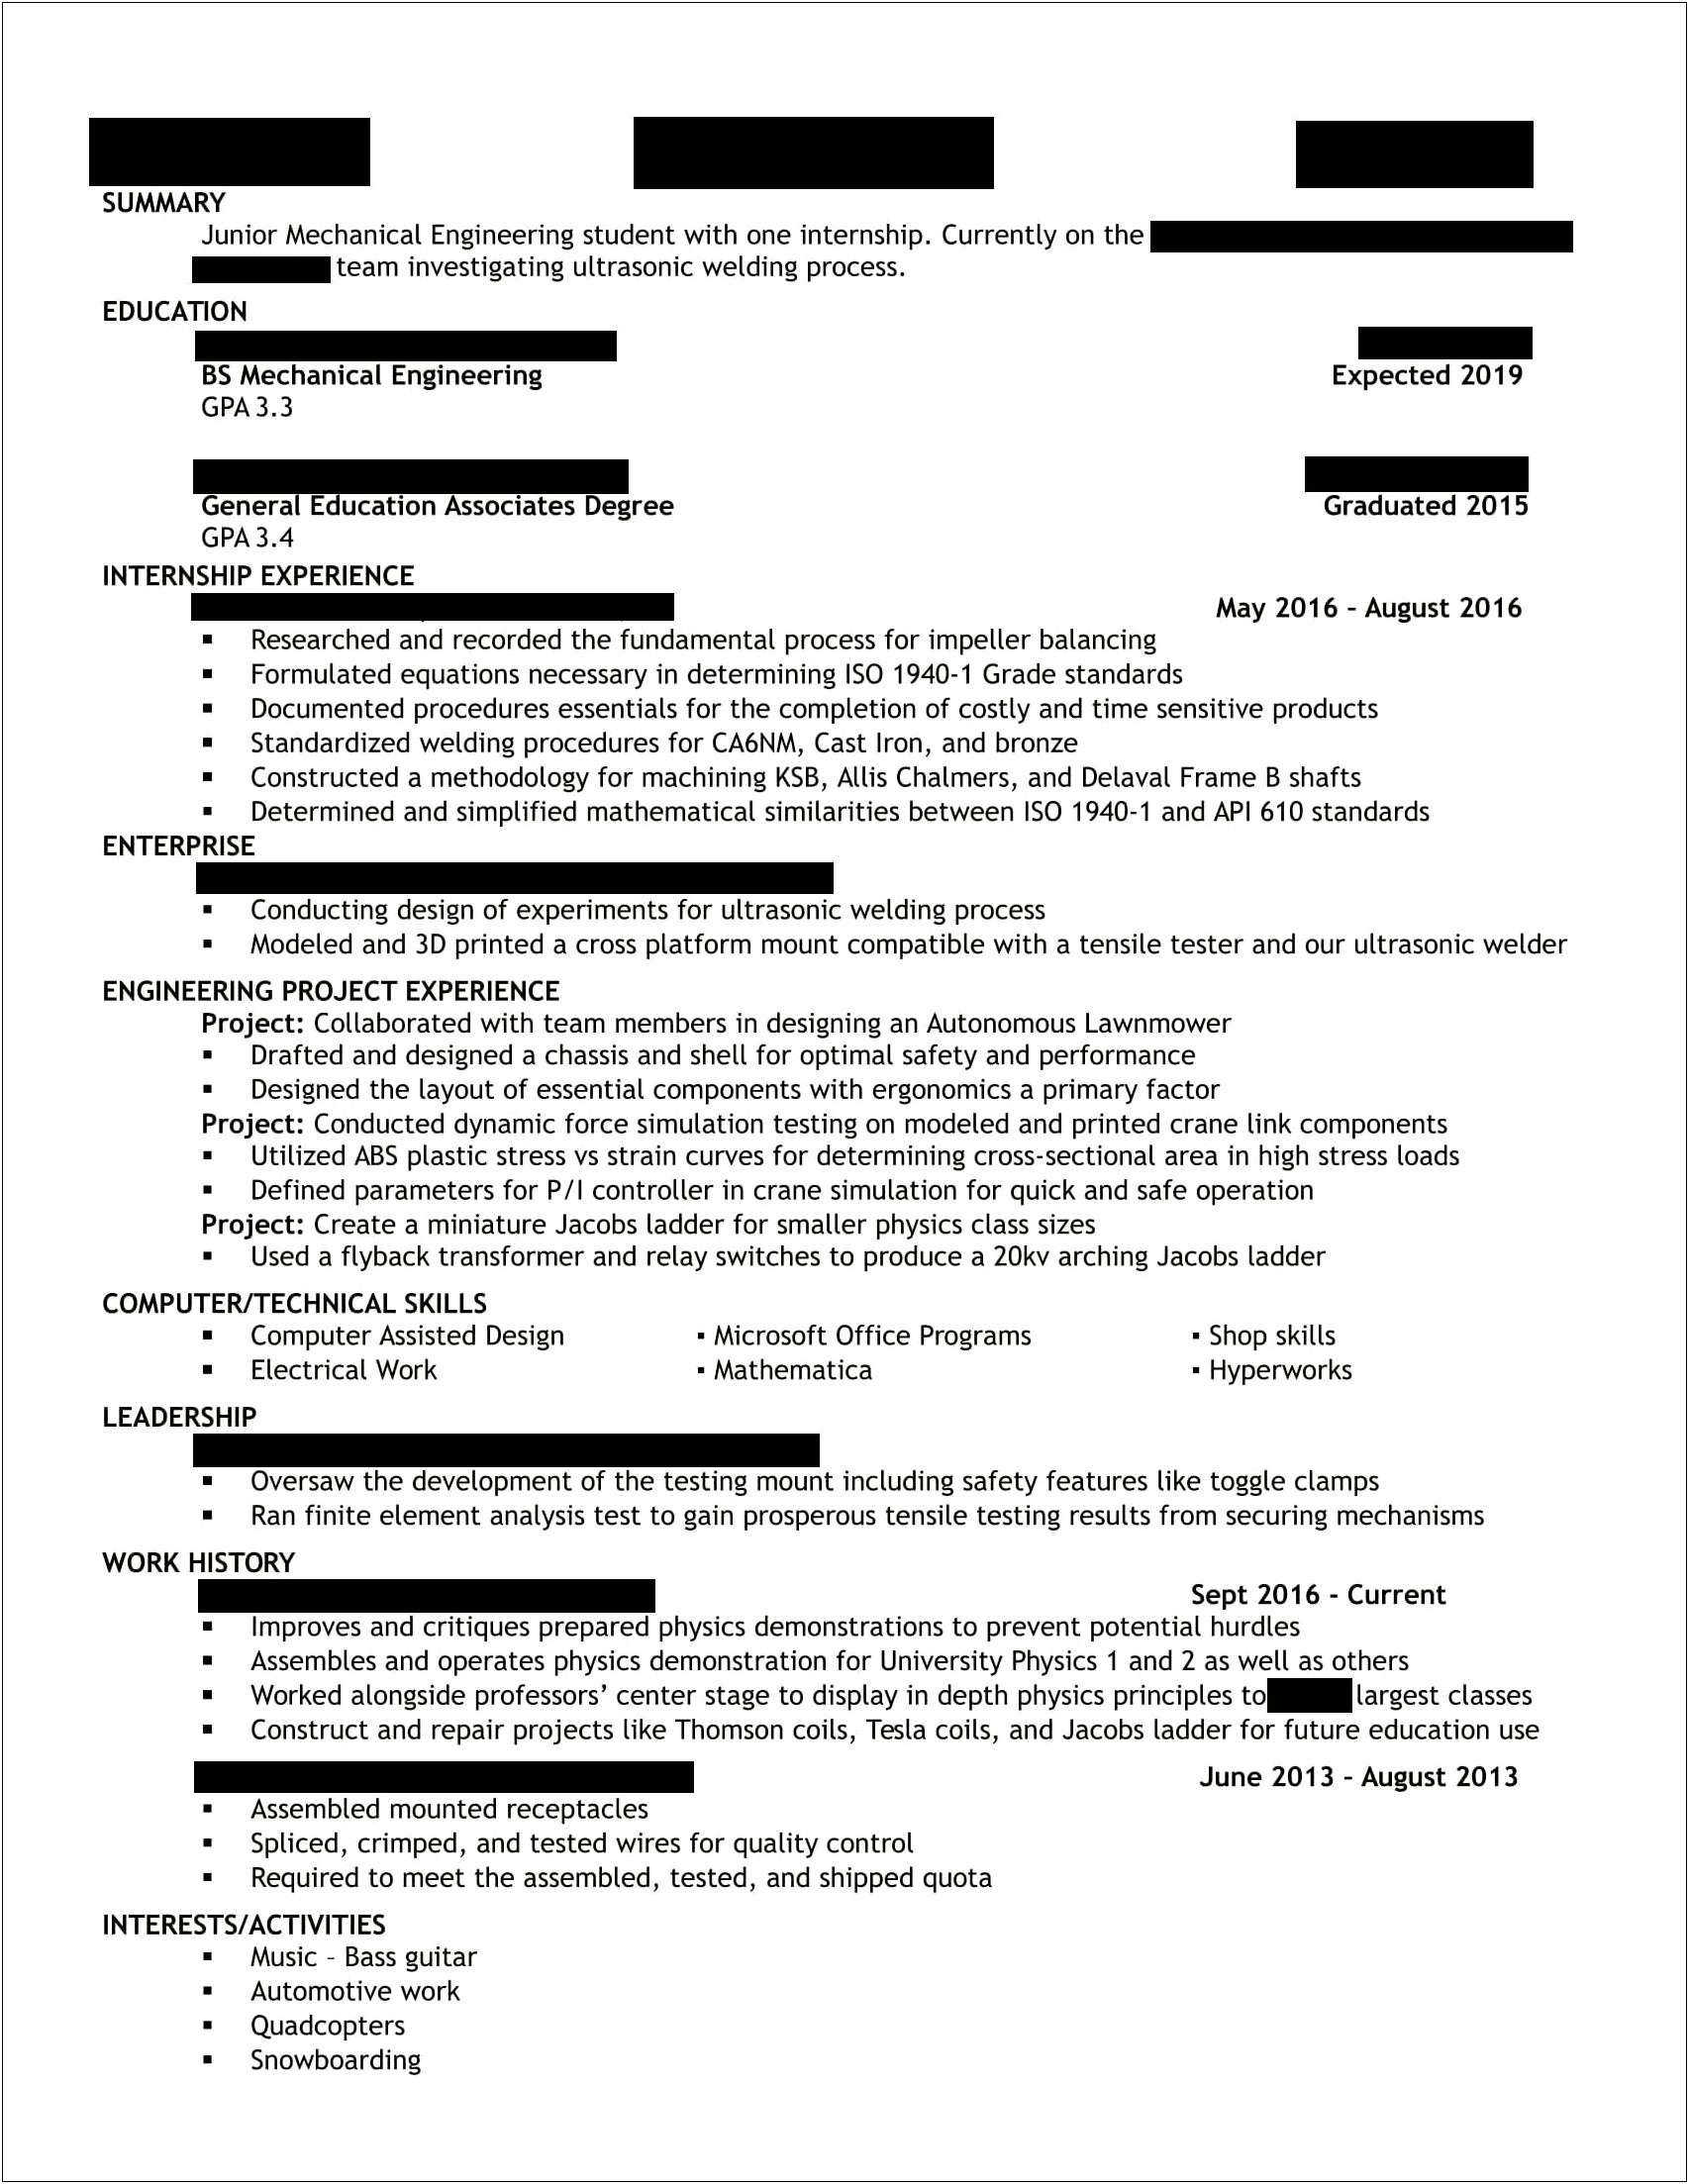 Sample Student Resume No Work Experience Enigneering